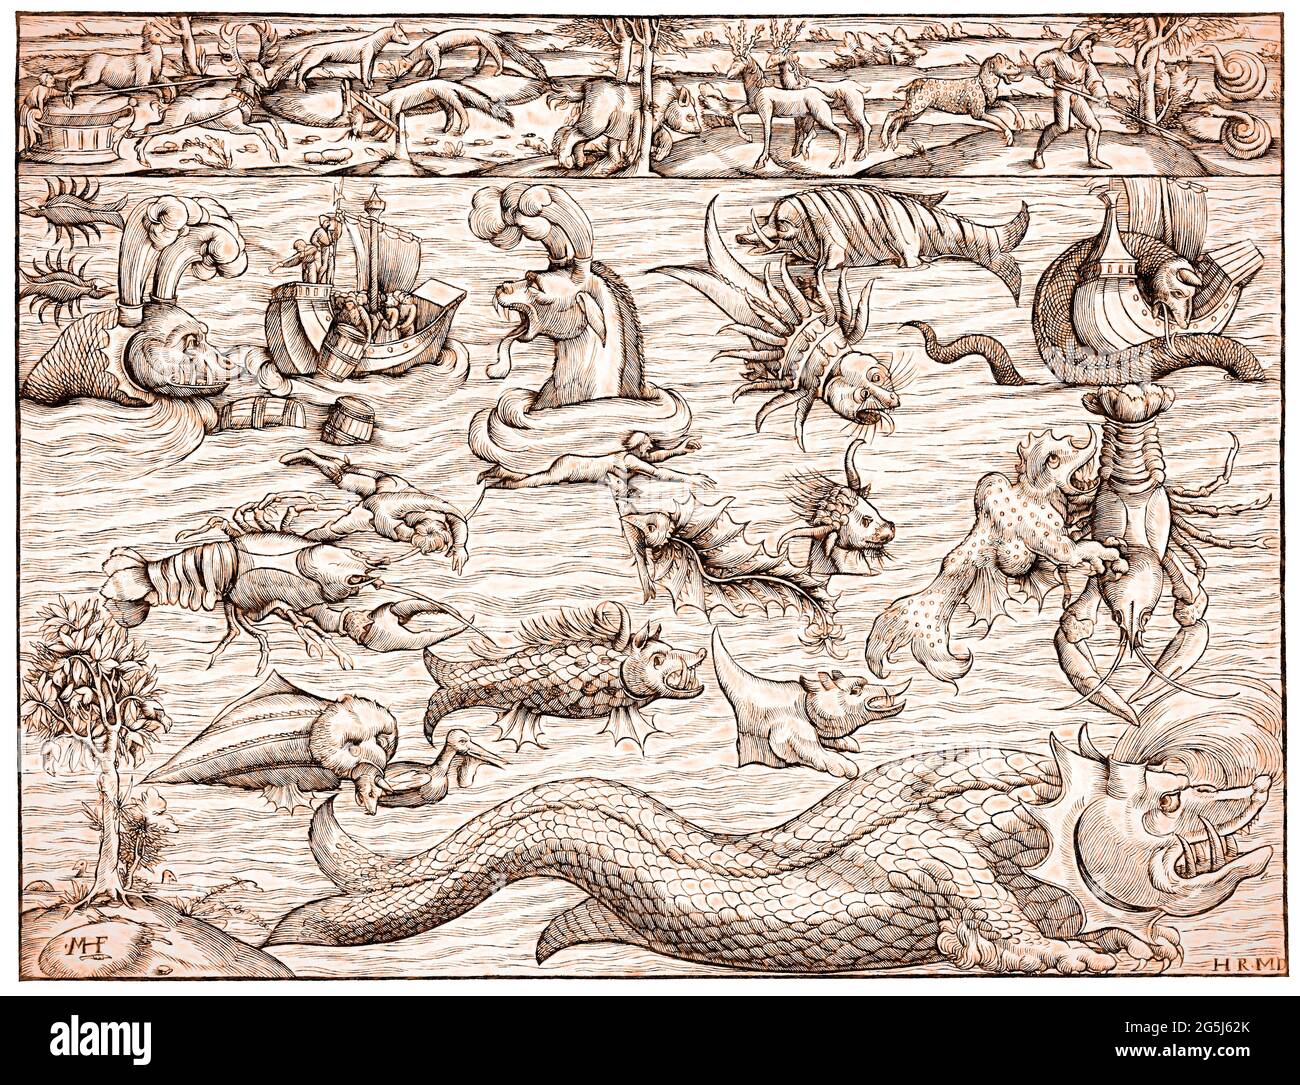 Land and sea monsters, based on Sebastian Munster's 'Comograhia uiversalis” from 1550, digitally edited Stock Photo